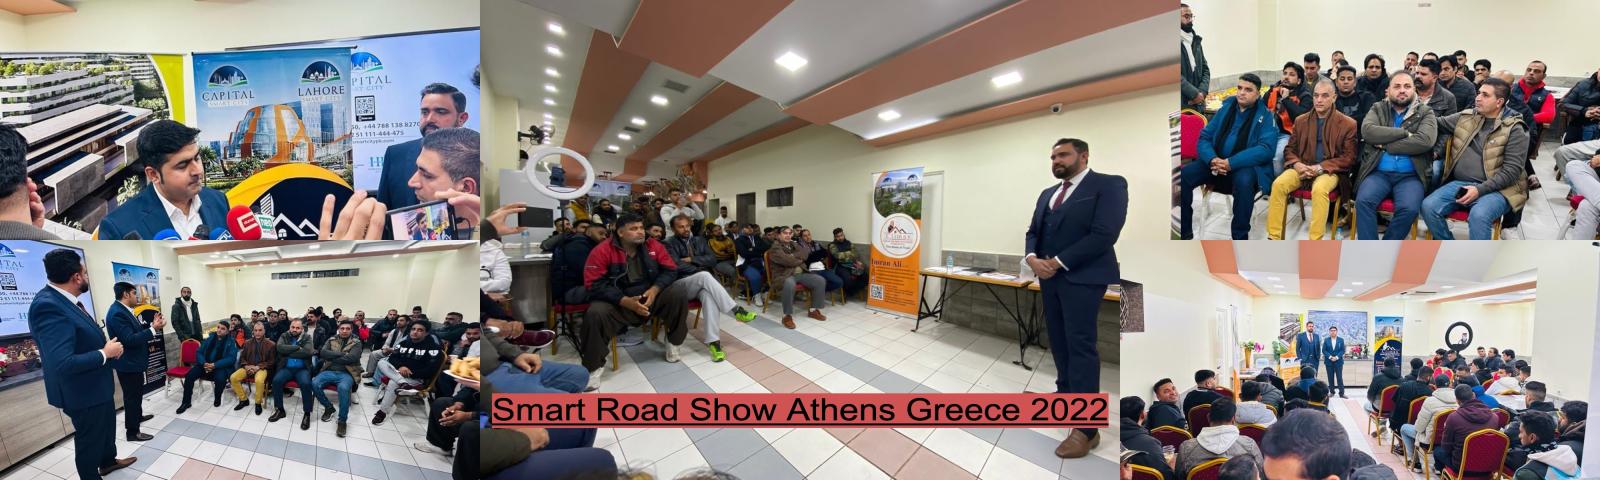 Smart Road Show Athens Greece 2022